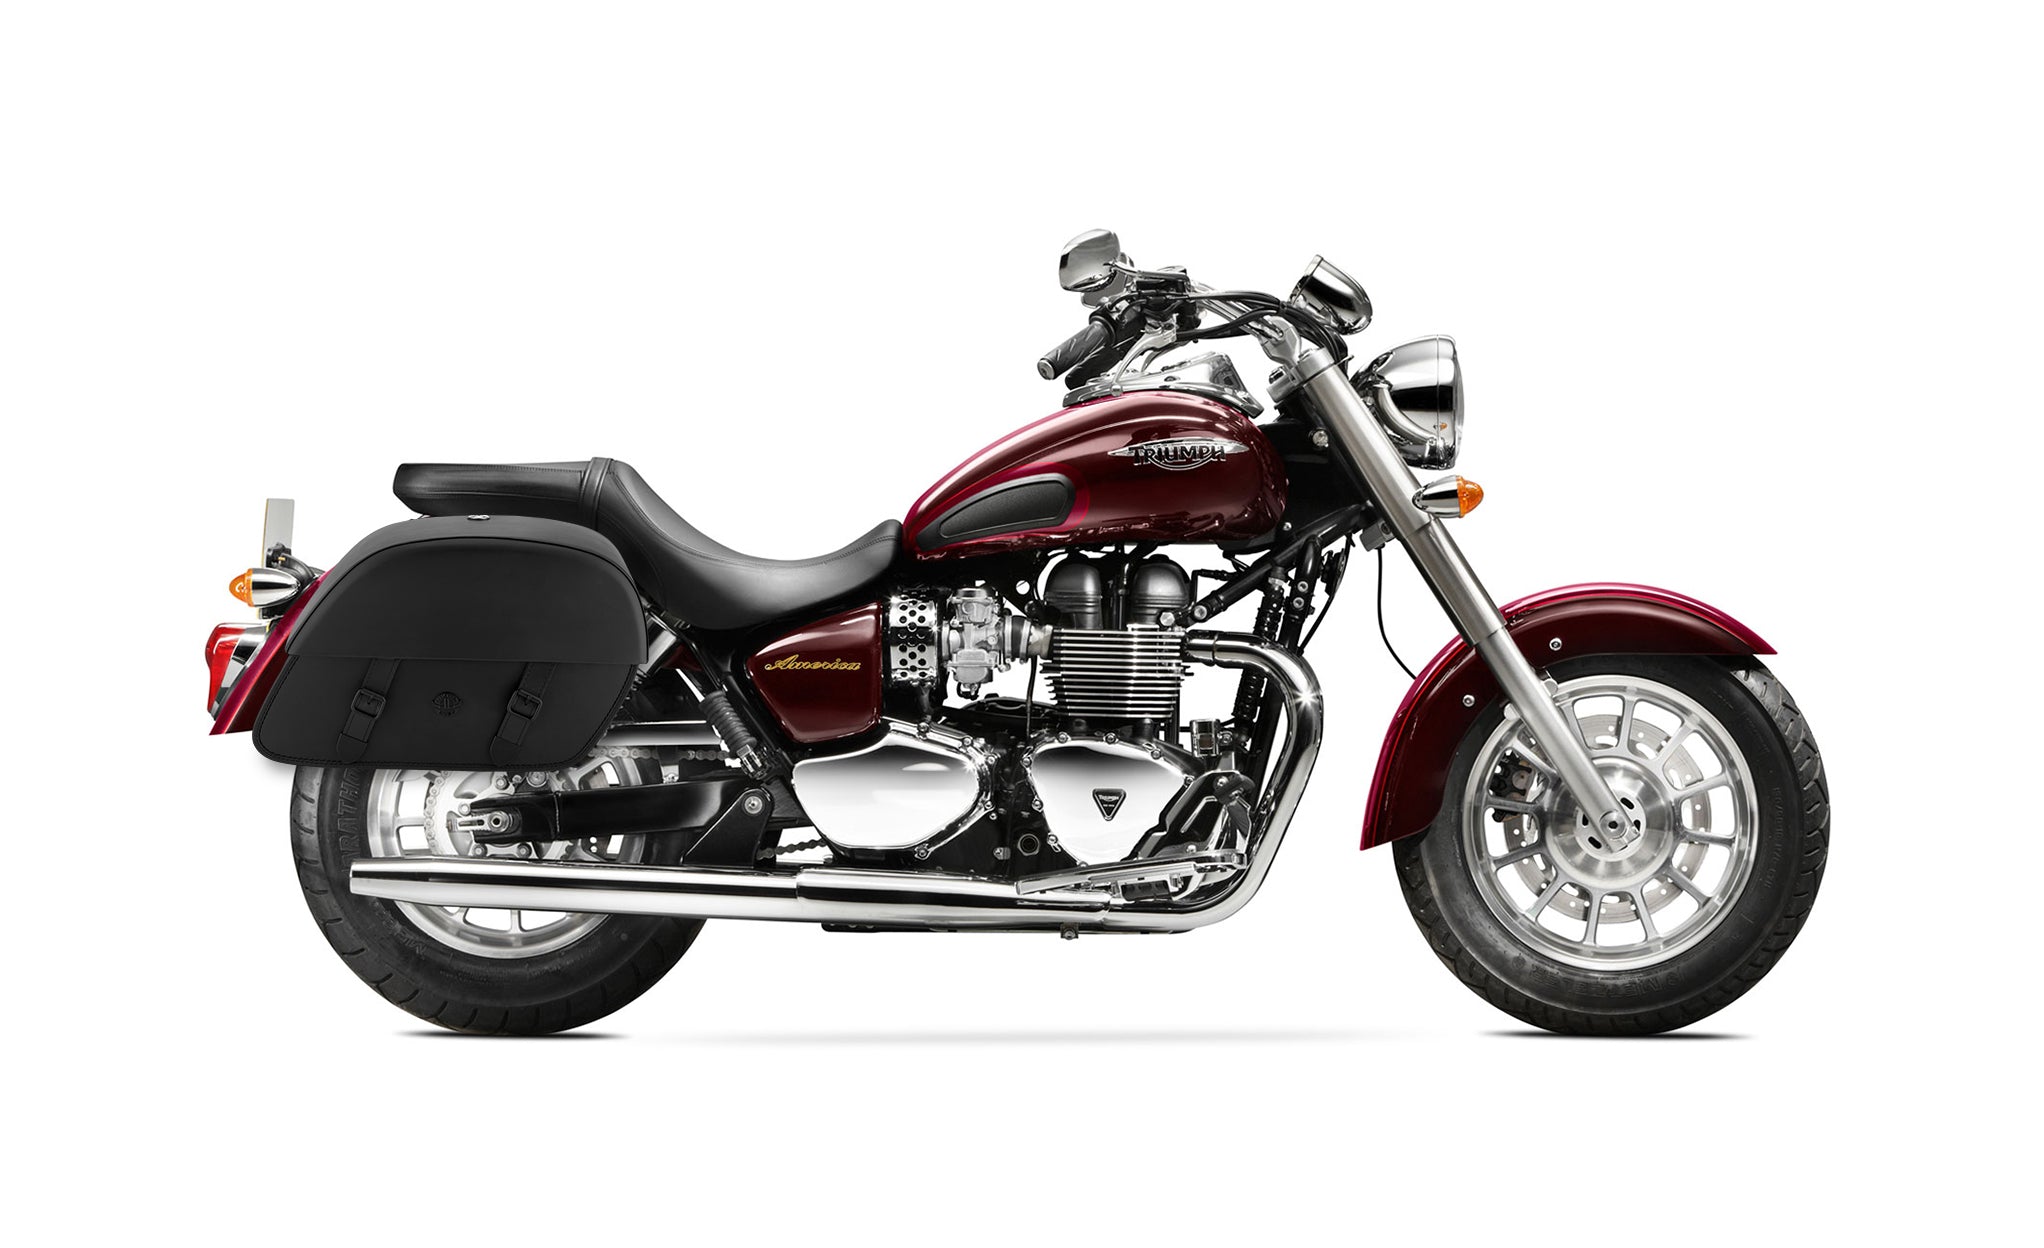 Viking Baelor Large Triumph America Leather Motorcycle Saddlebags on Bike Photo @expand